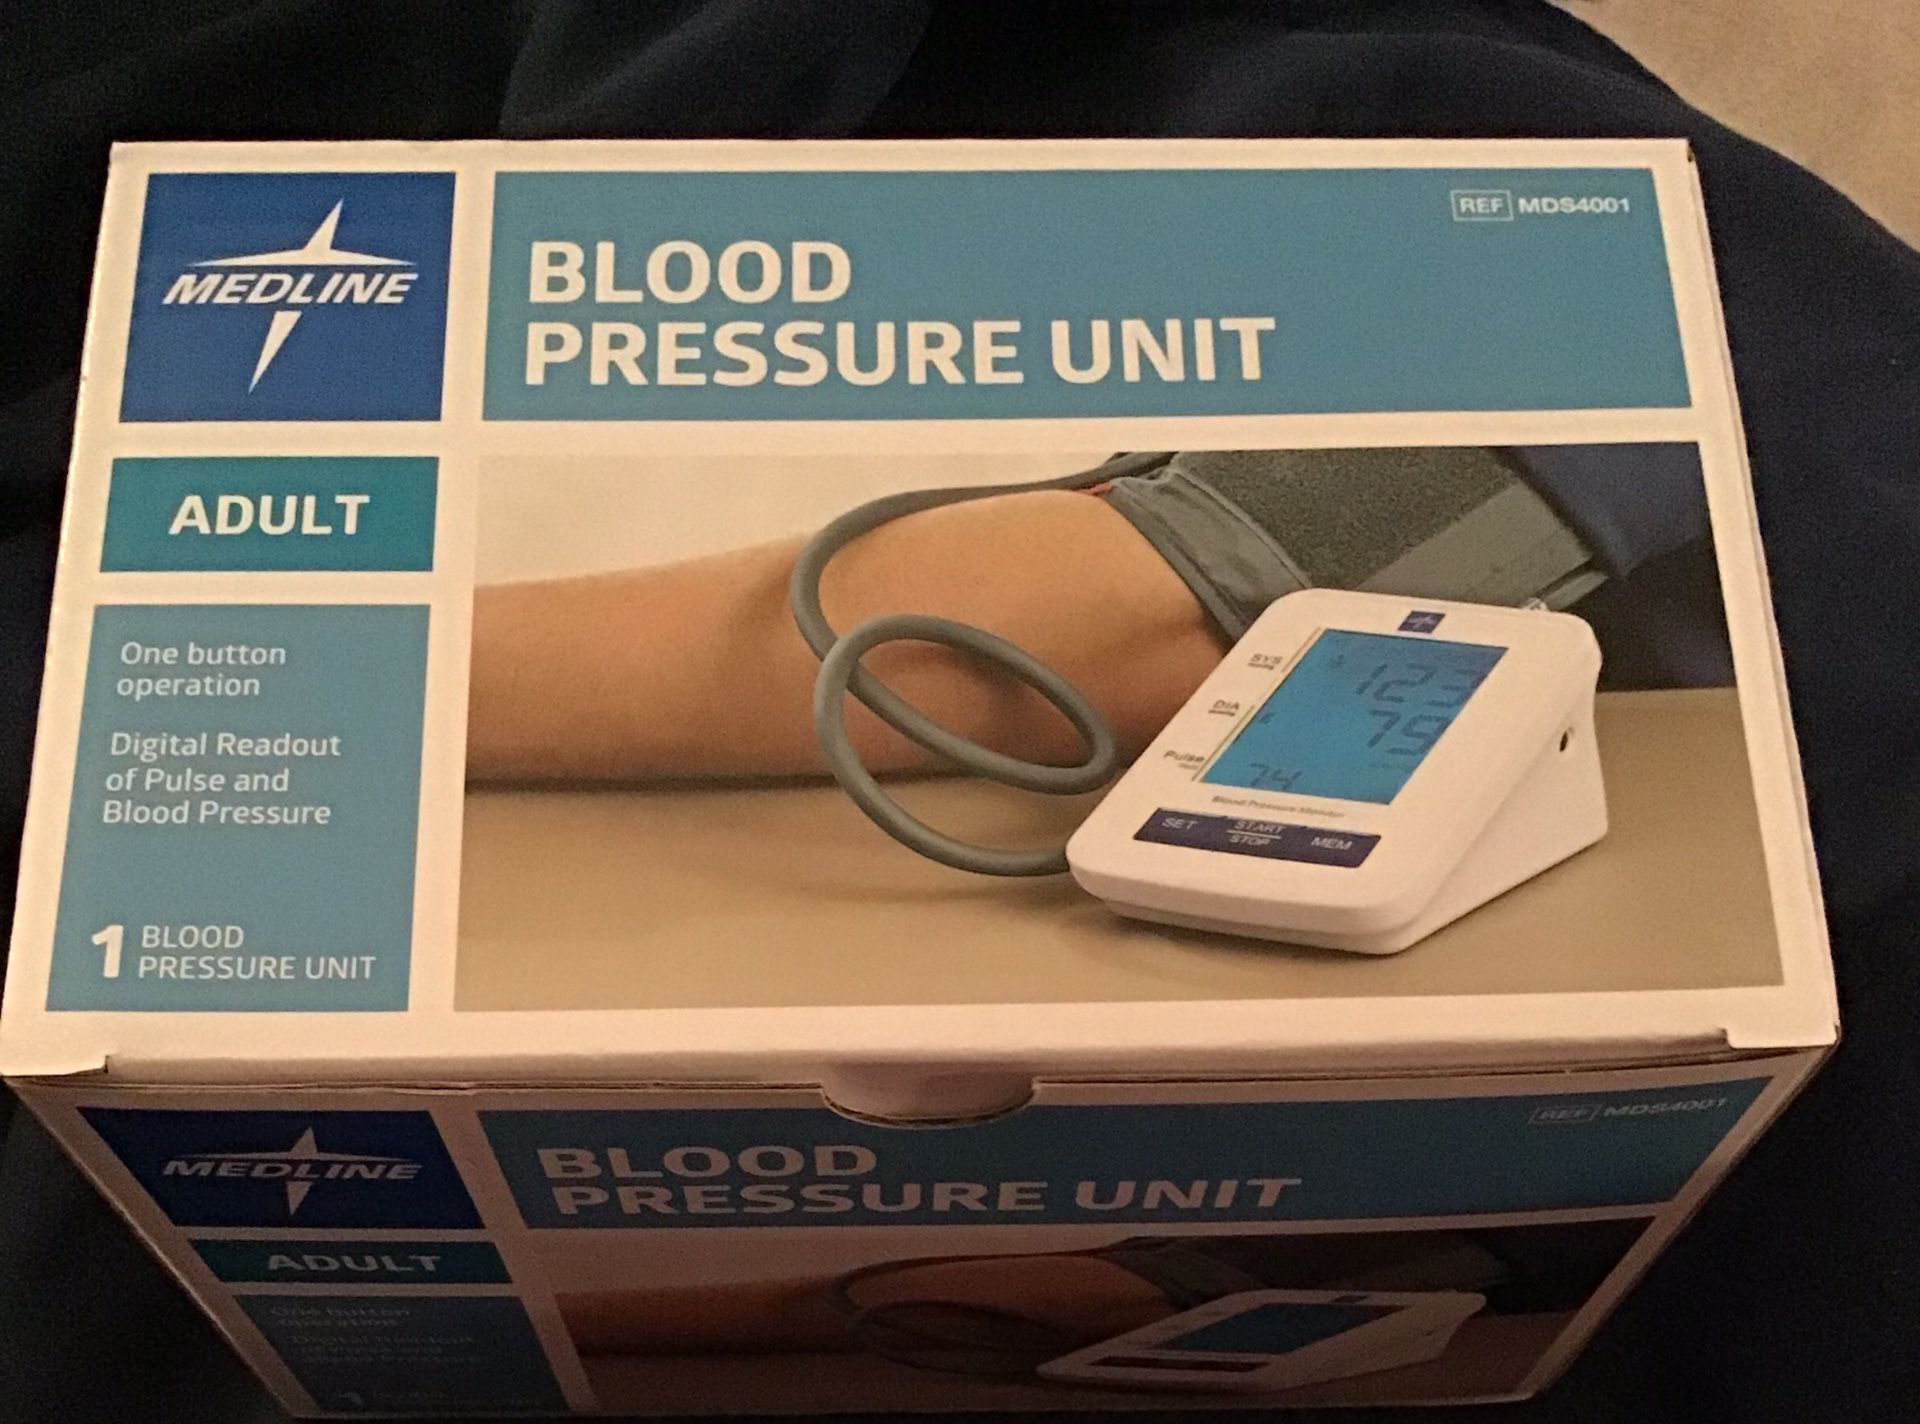 New Blood pressure unit